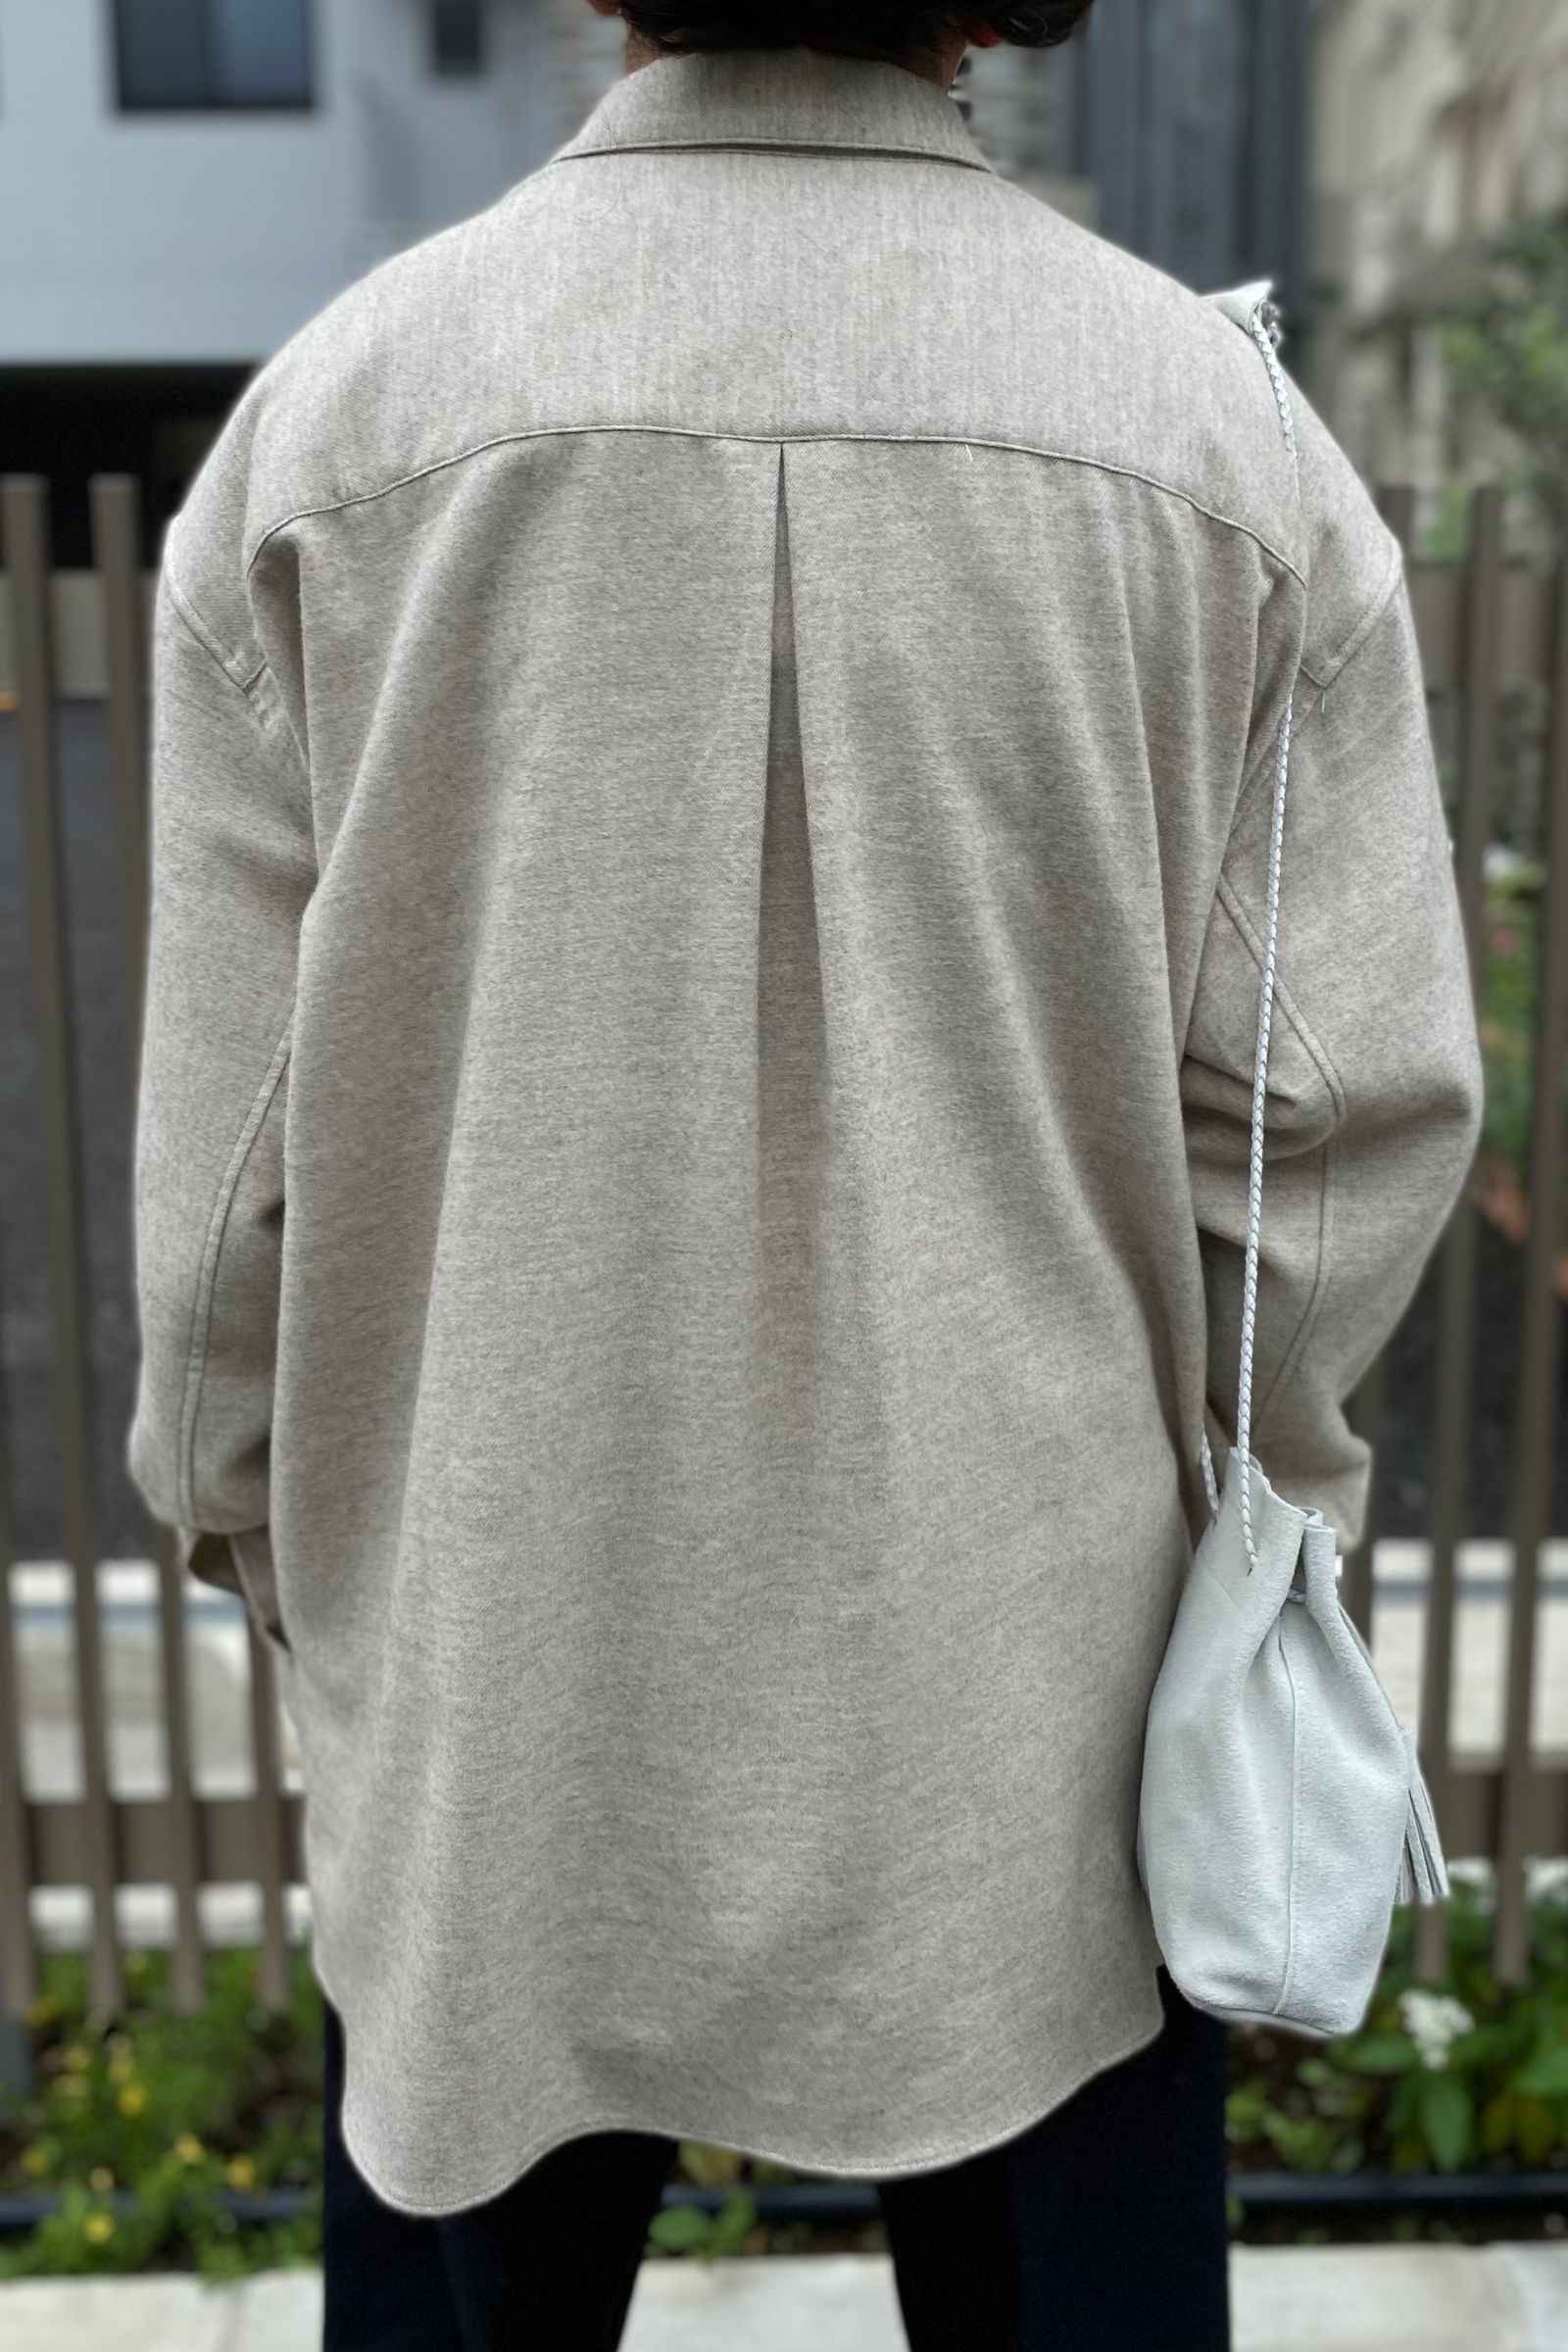 POLYPLOID - shirt jacket b 21aw | asterisk